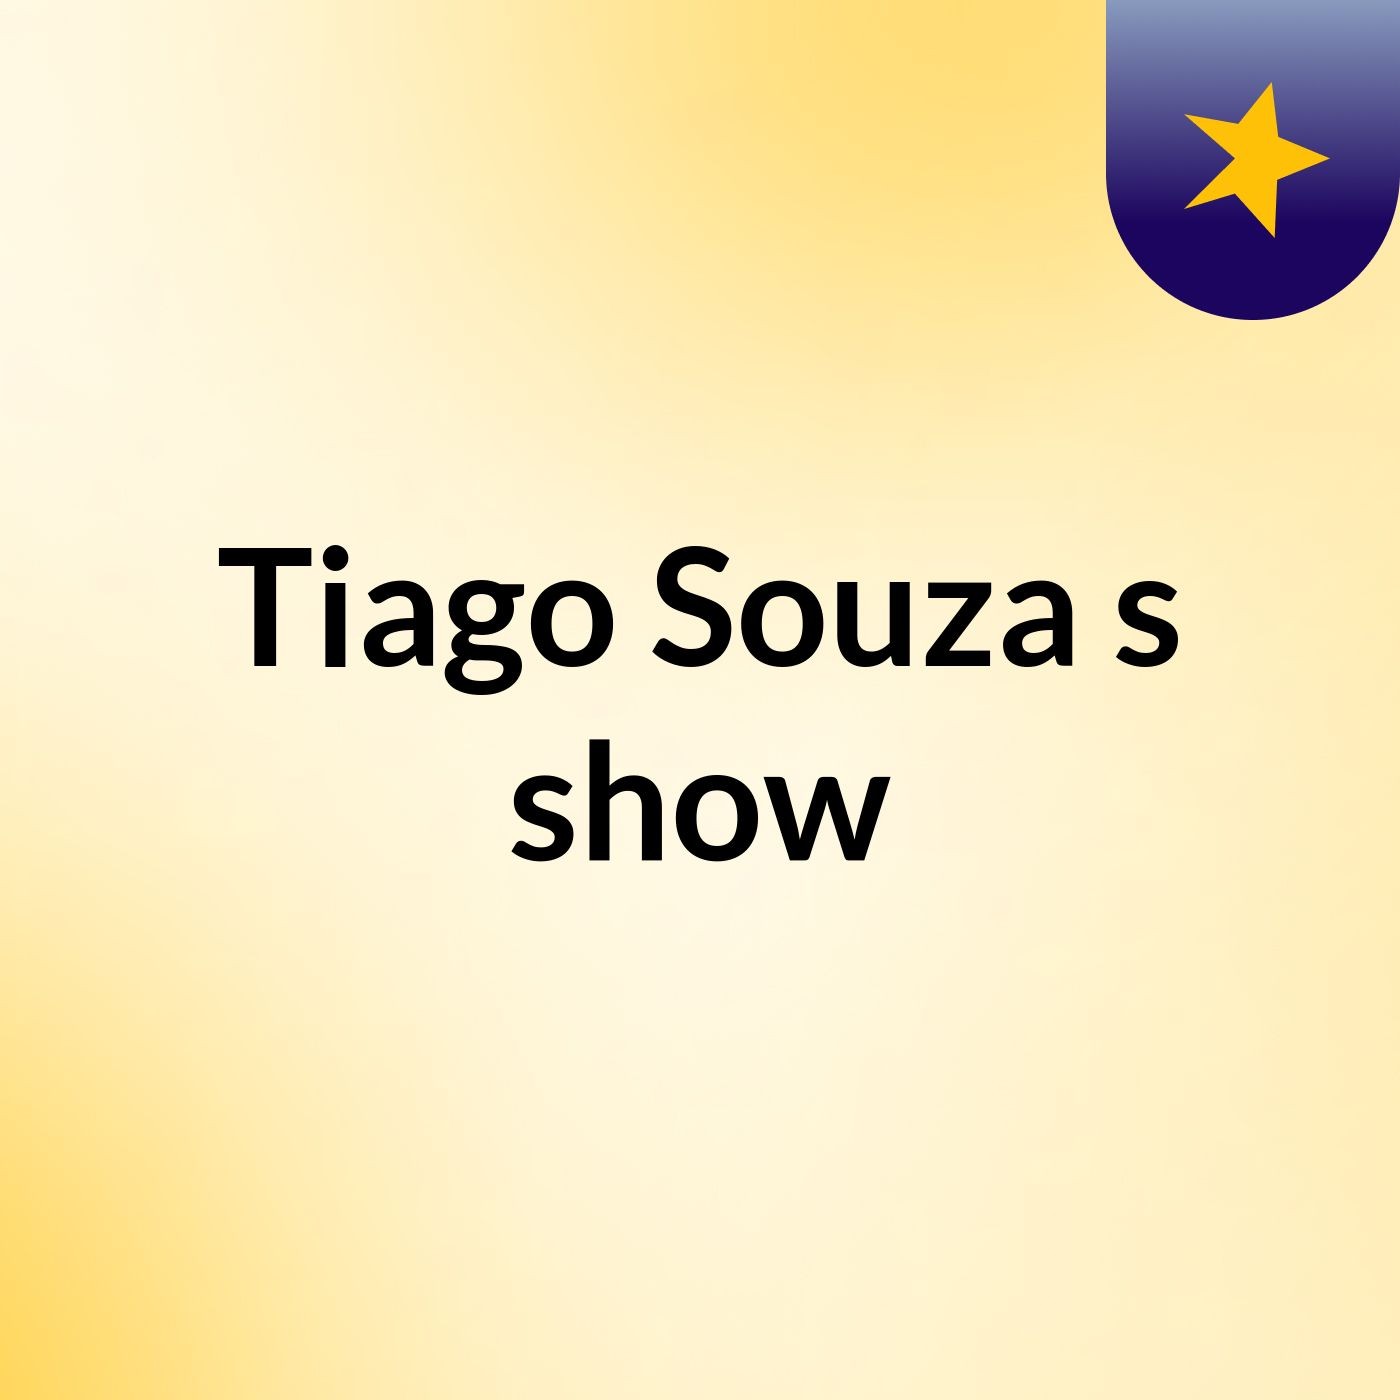 Tiago Souza's show